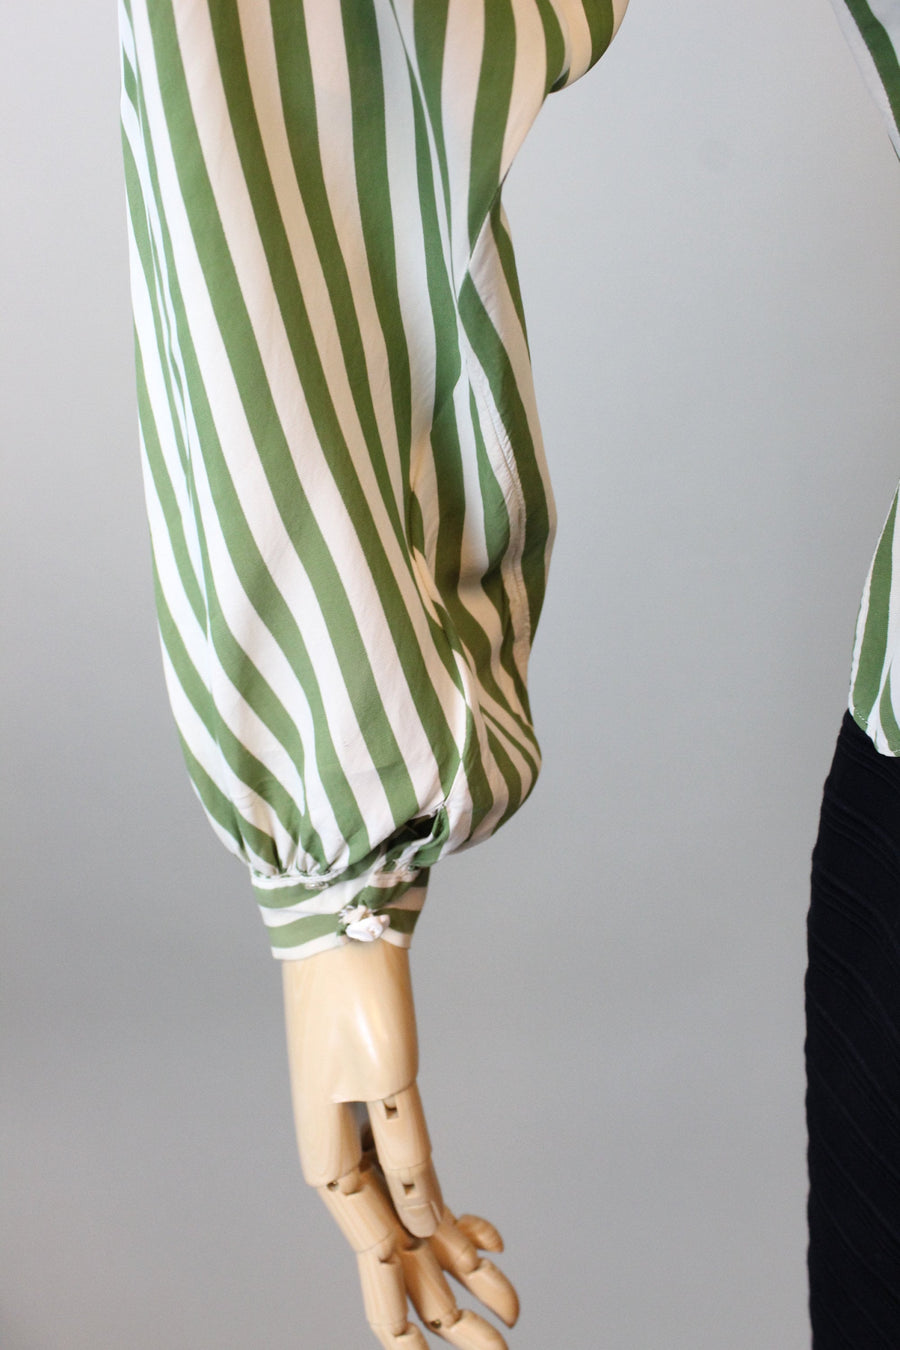 1940s BALLOON SLEEVE striped rayon blouse small medium | new fall